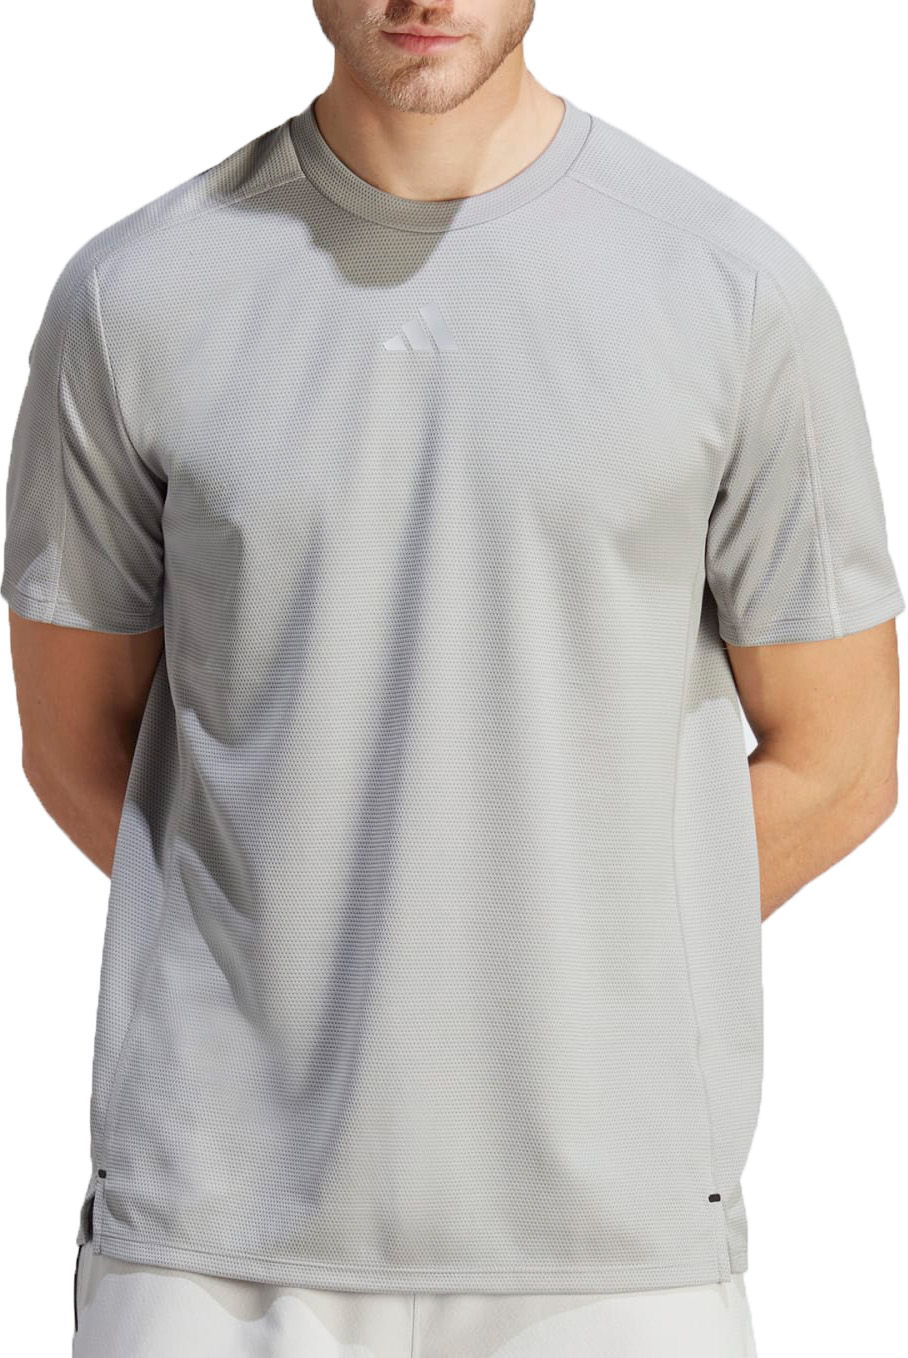 adidas Workout T-Shirt Rövid ujjú póló